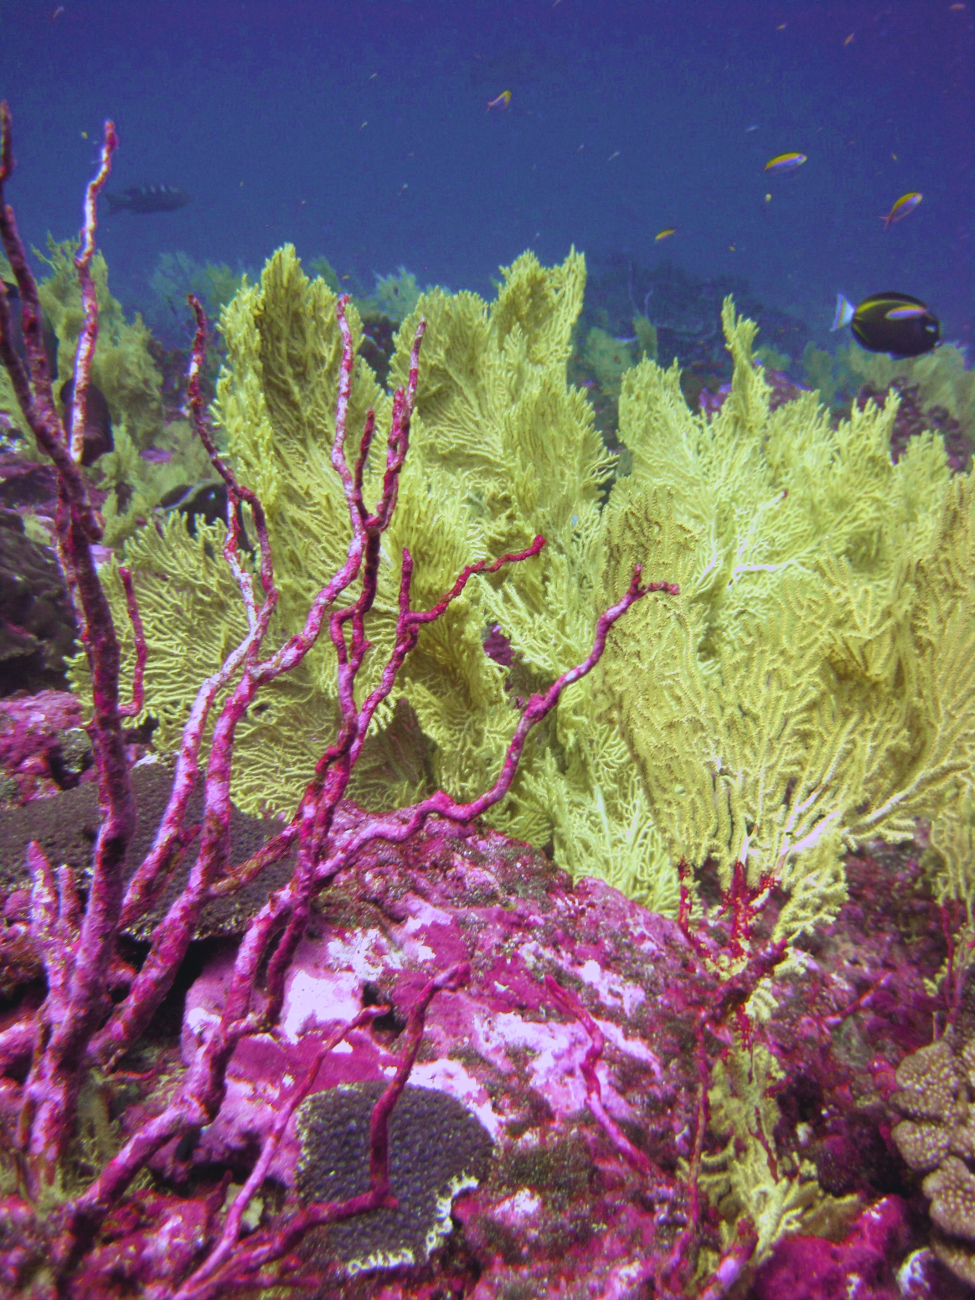 Red dead coral bush - greenish gorgonian coral